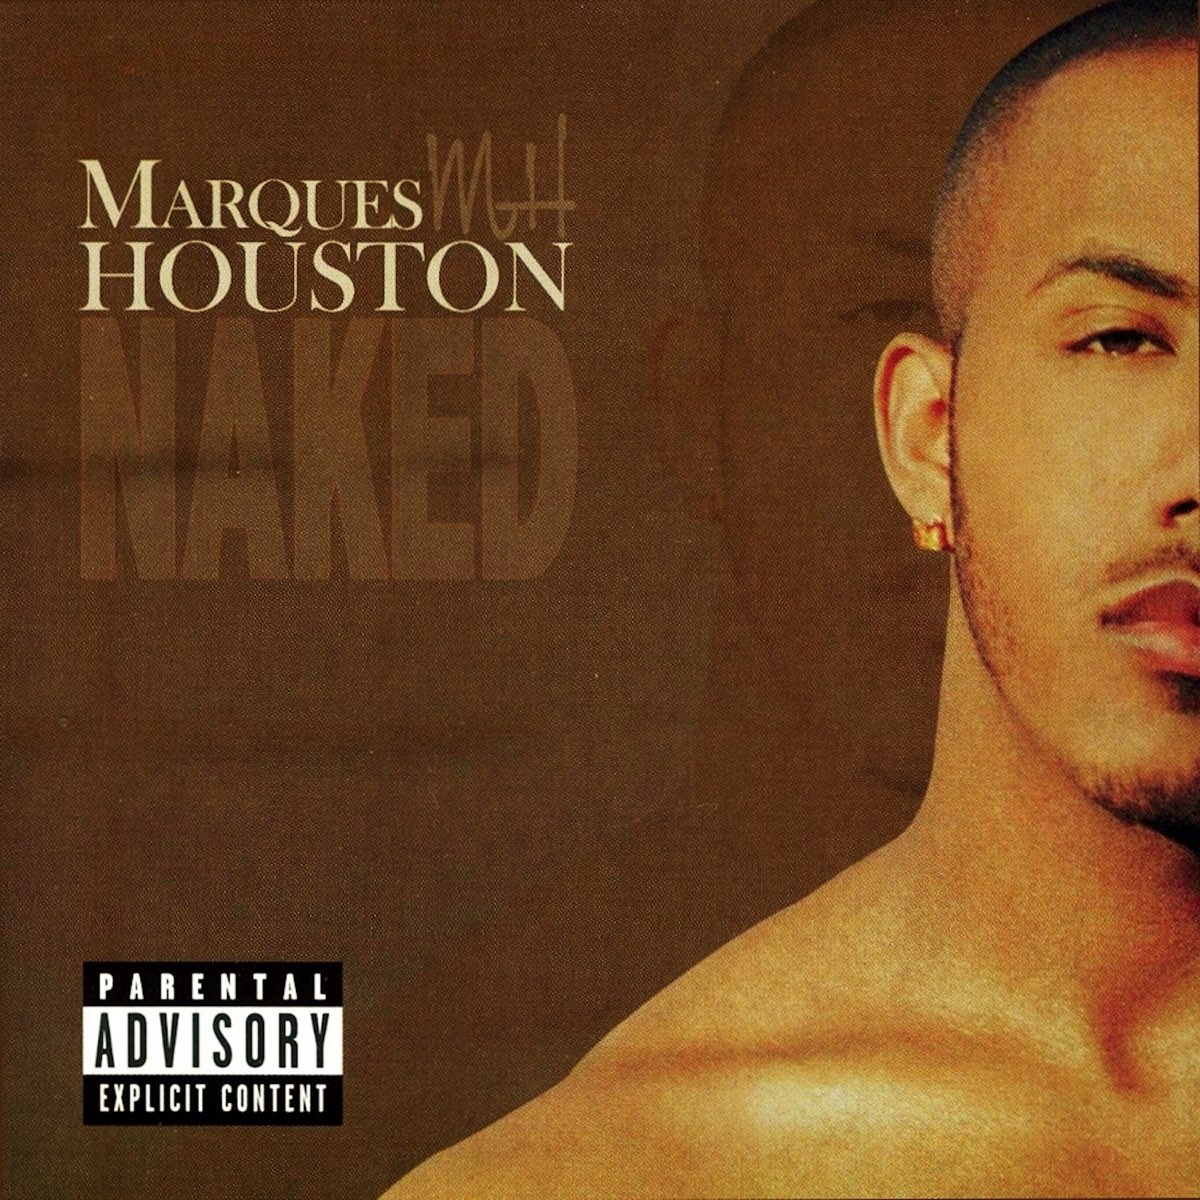 Альбом "Naked" (Marques Houston) .